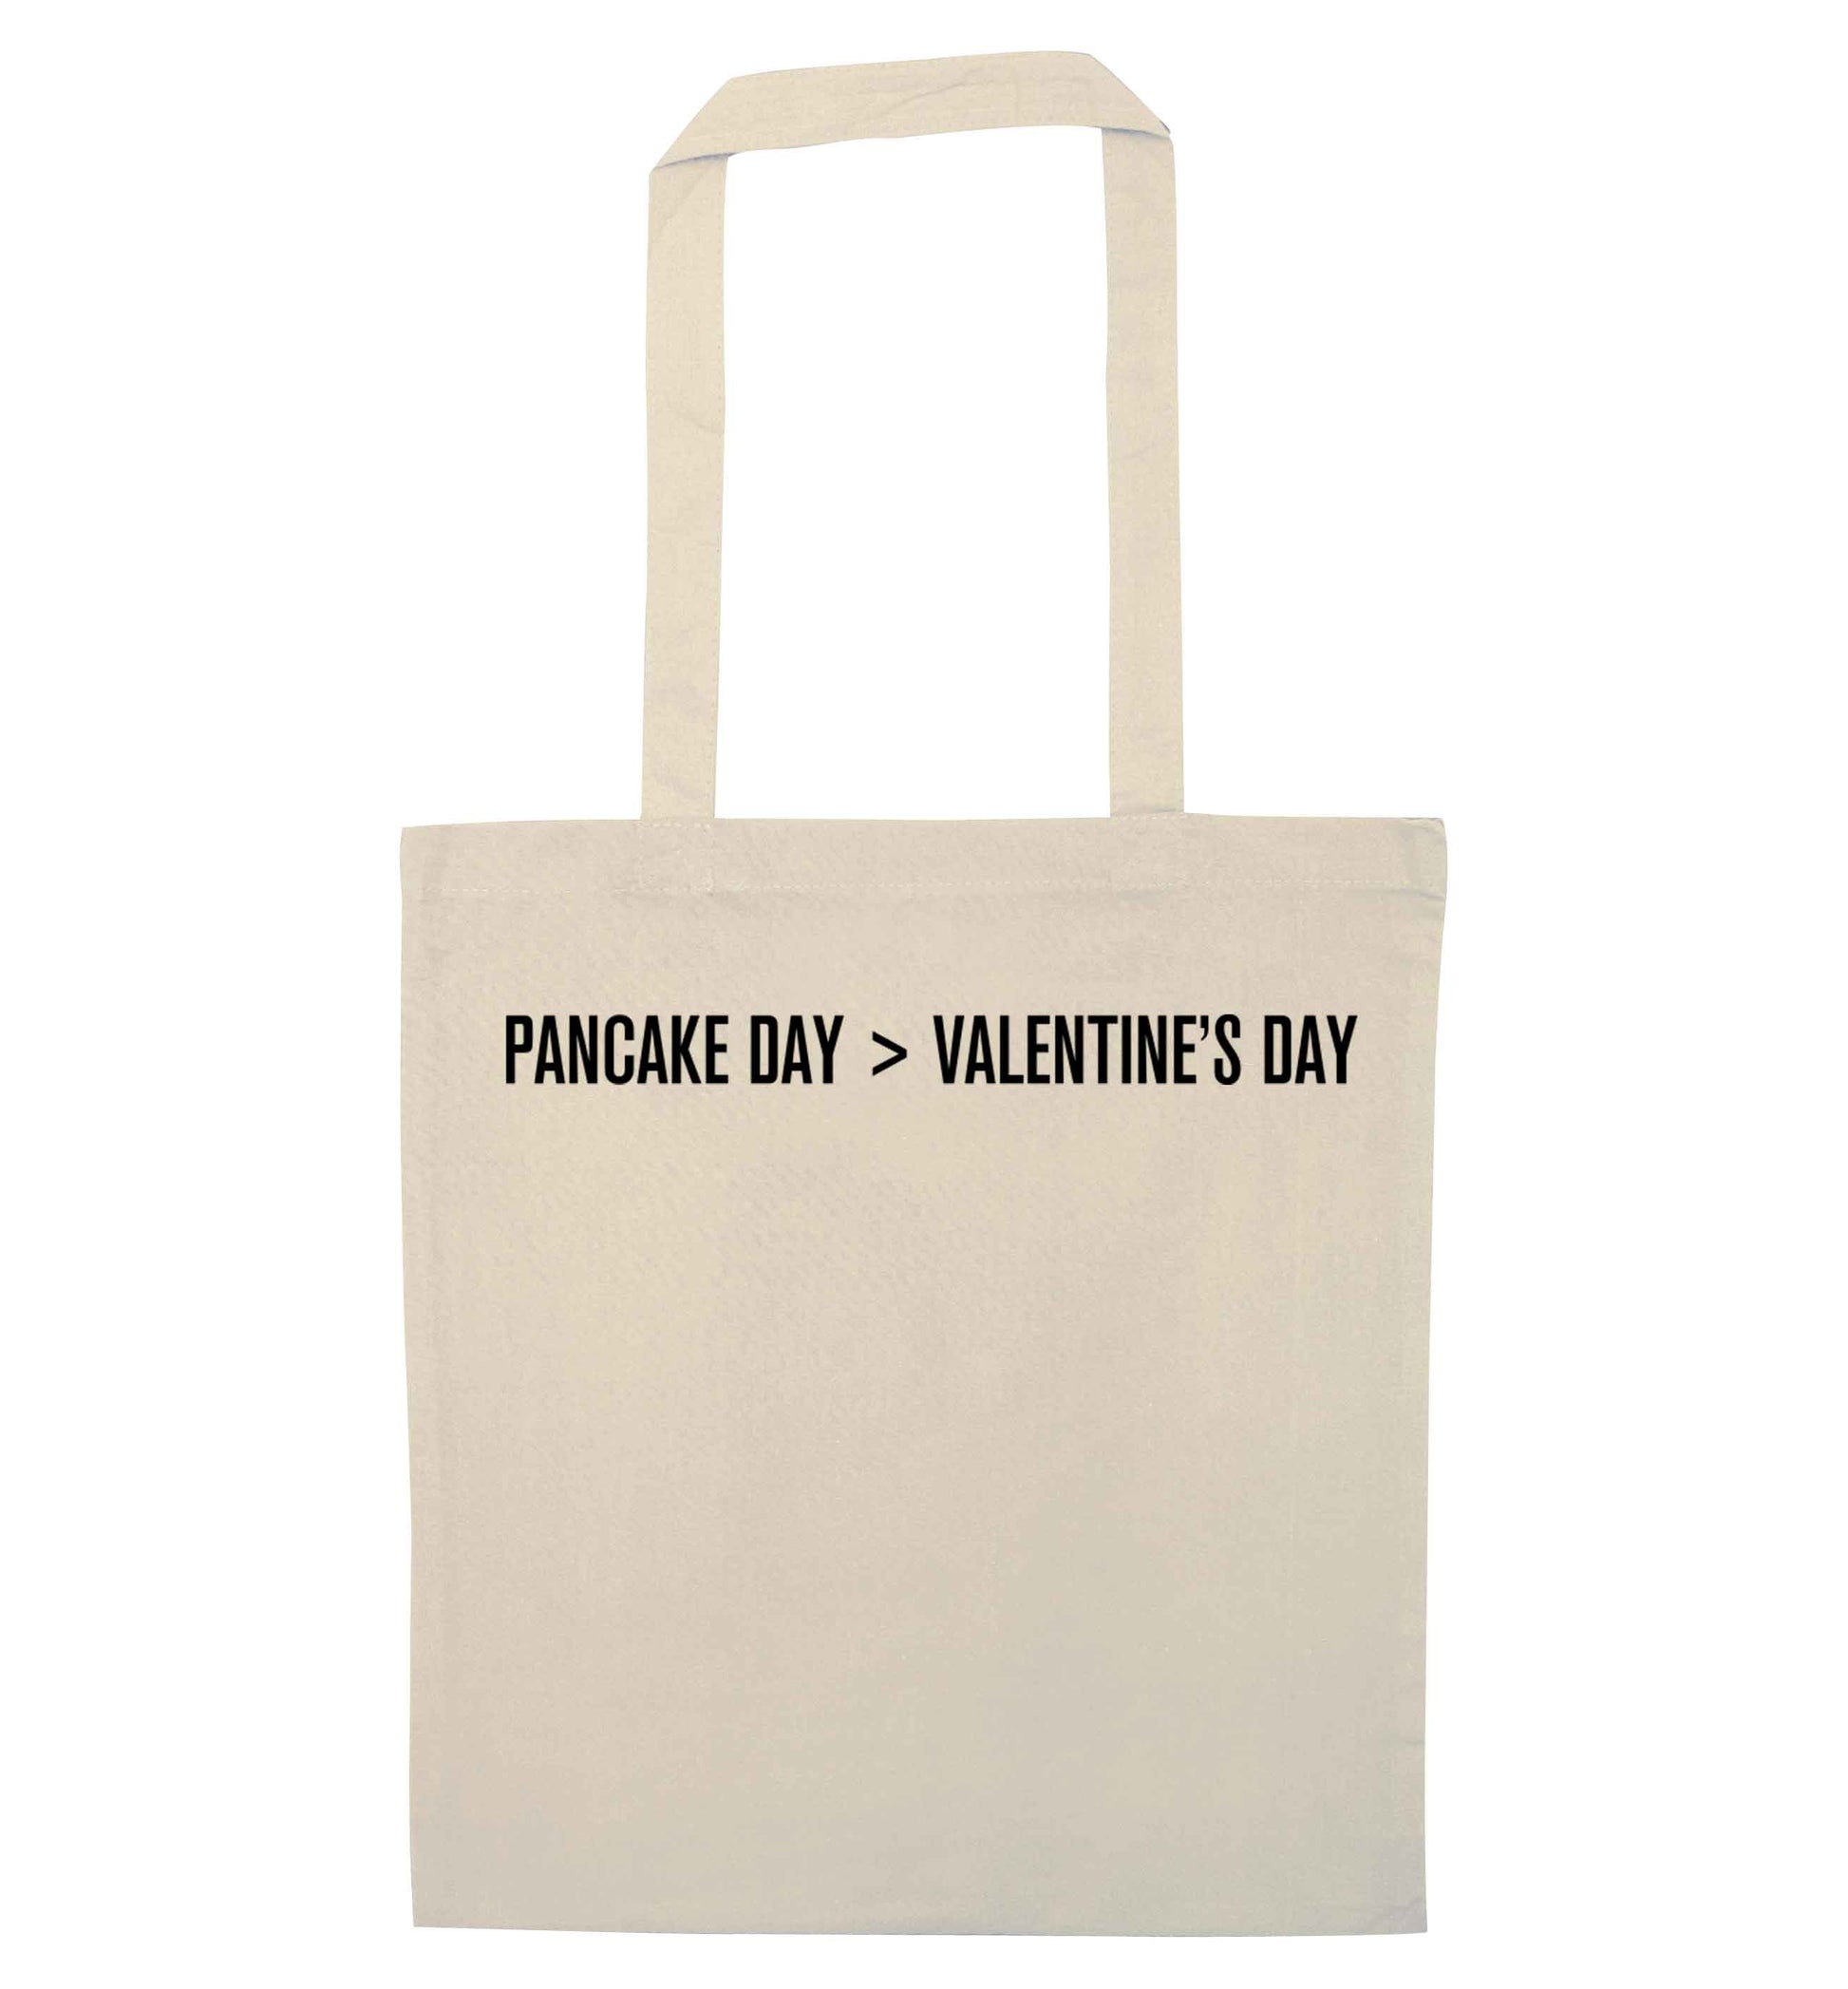 Pancake day > valentines day natural tote bag